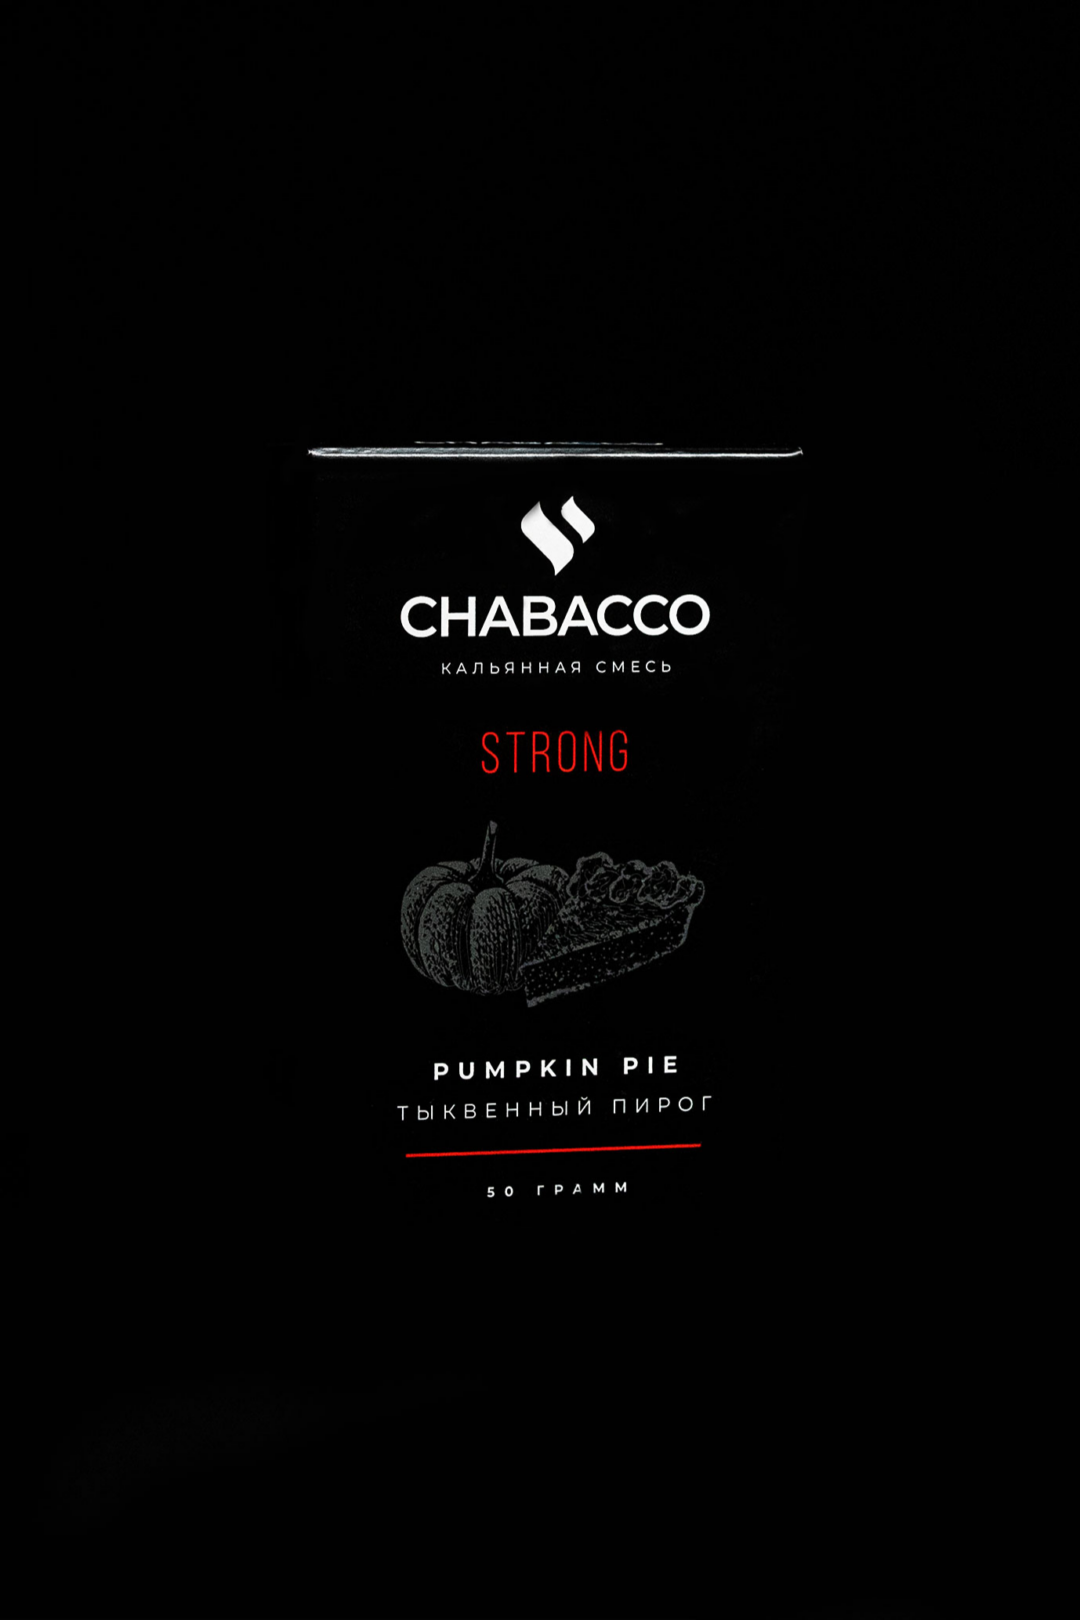 Chabacco Strong PUMPKIN PIE ( Balqabaq, tort )